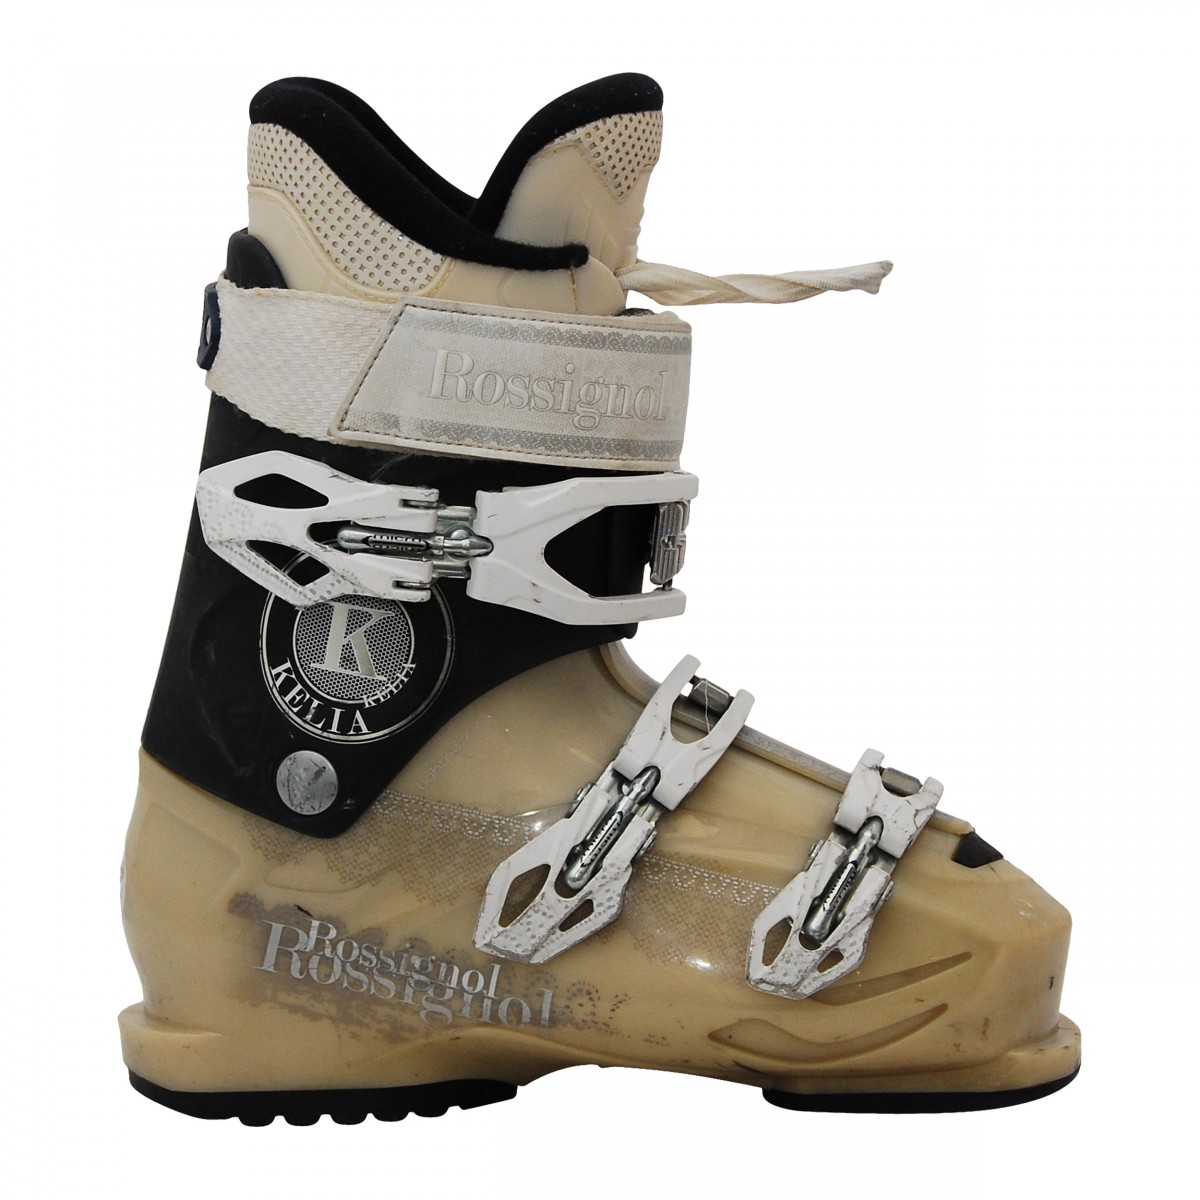 Chaussure ski occasion Rossignol Pure comfort noir 36/23MP Qualité A 